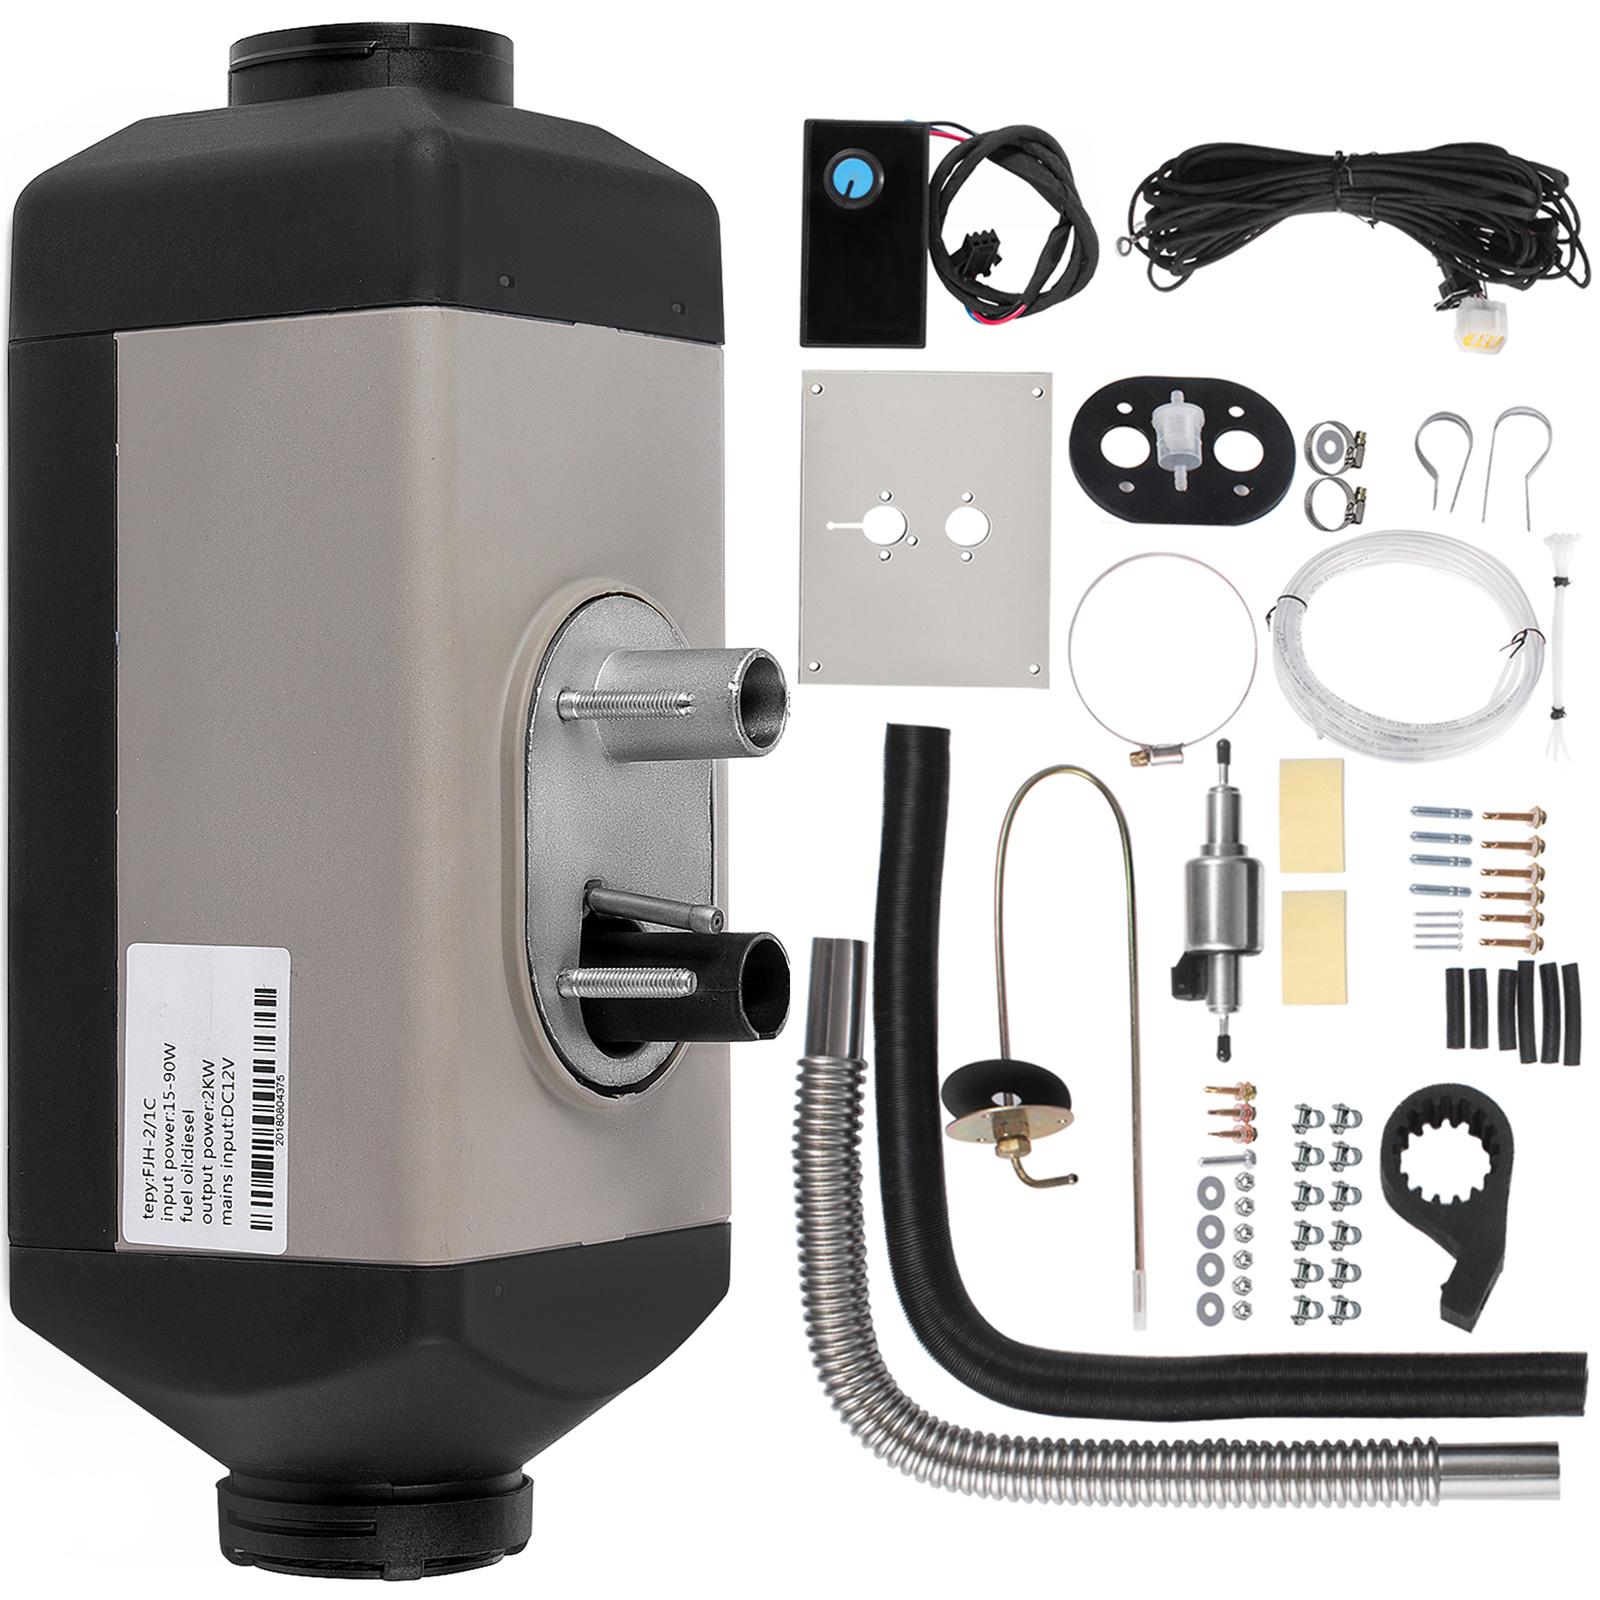 VEVOR Planar 2kw Diesel Air Heater Digital Fuel T Section Manual